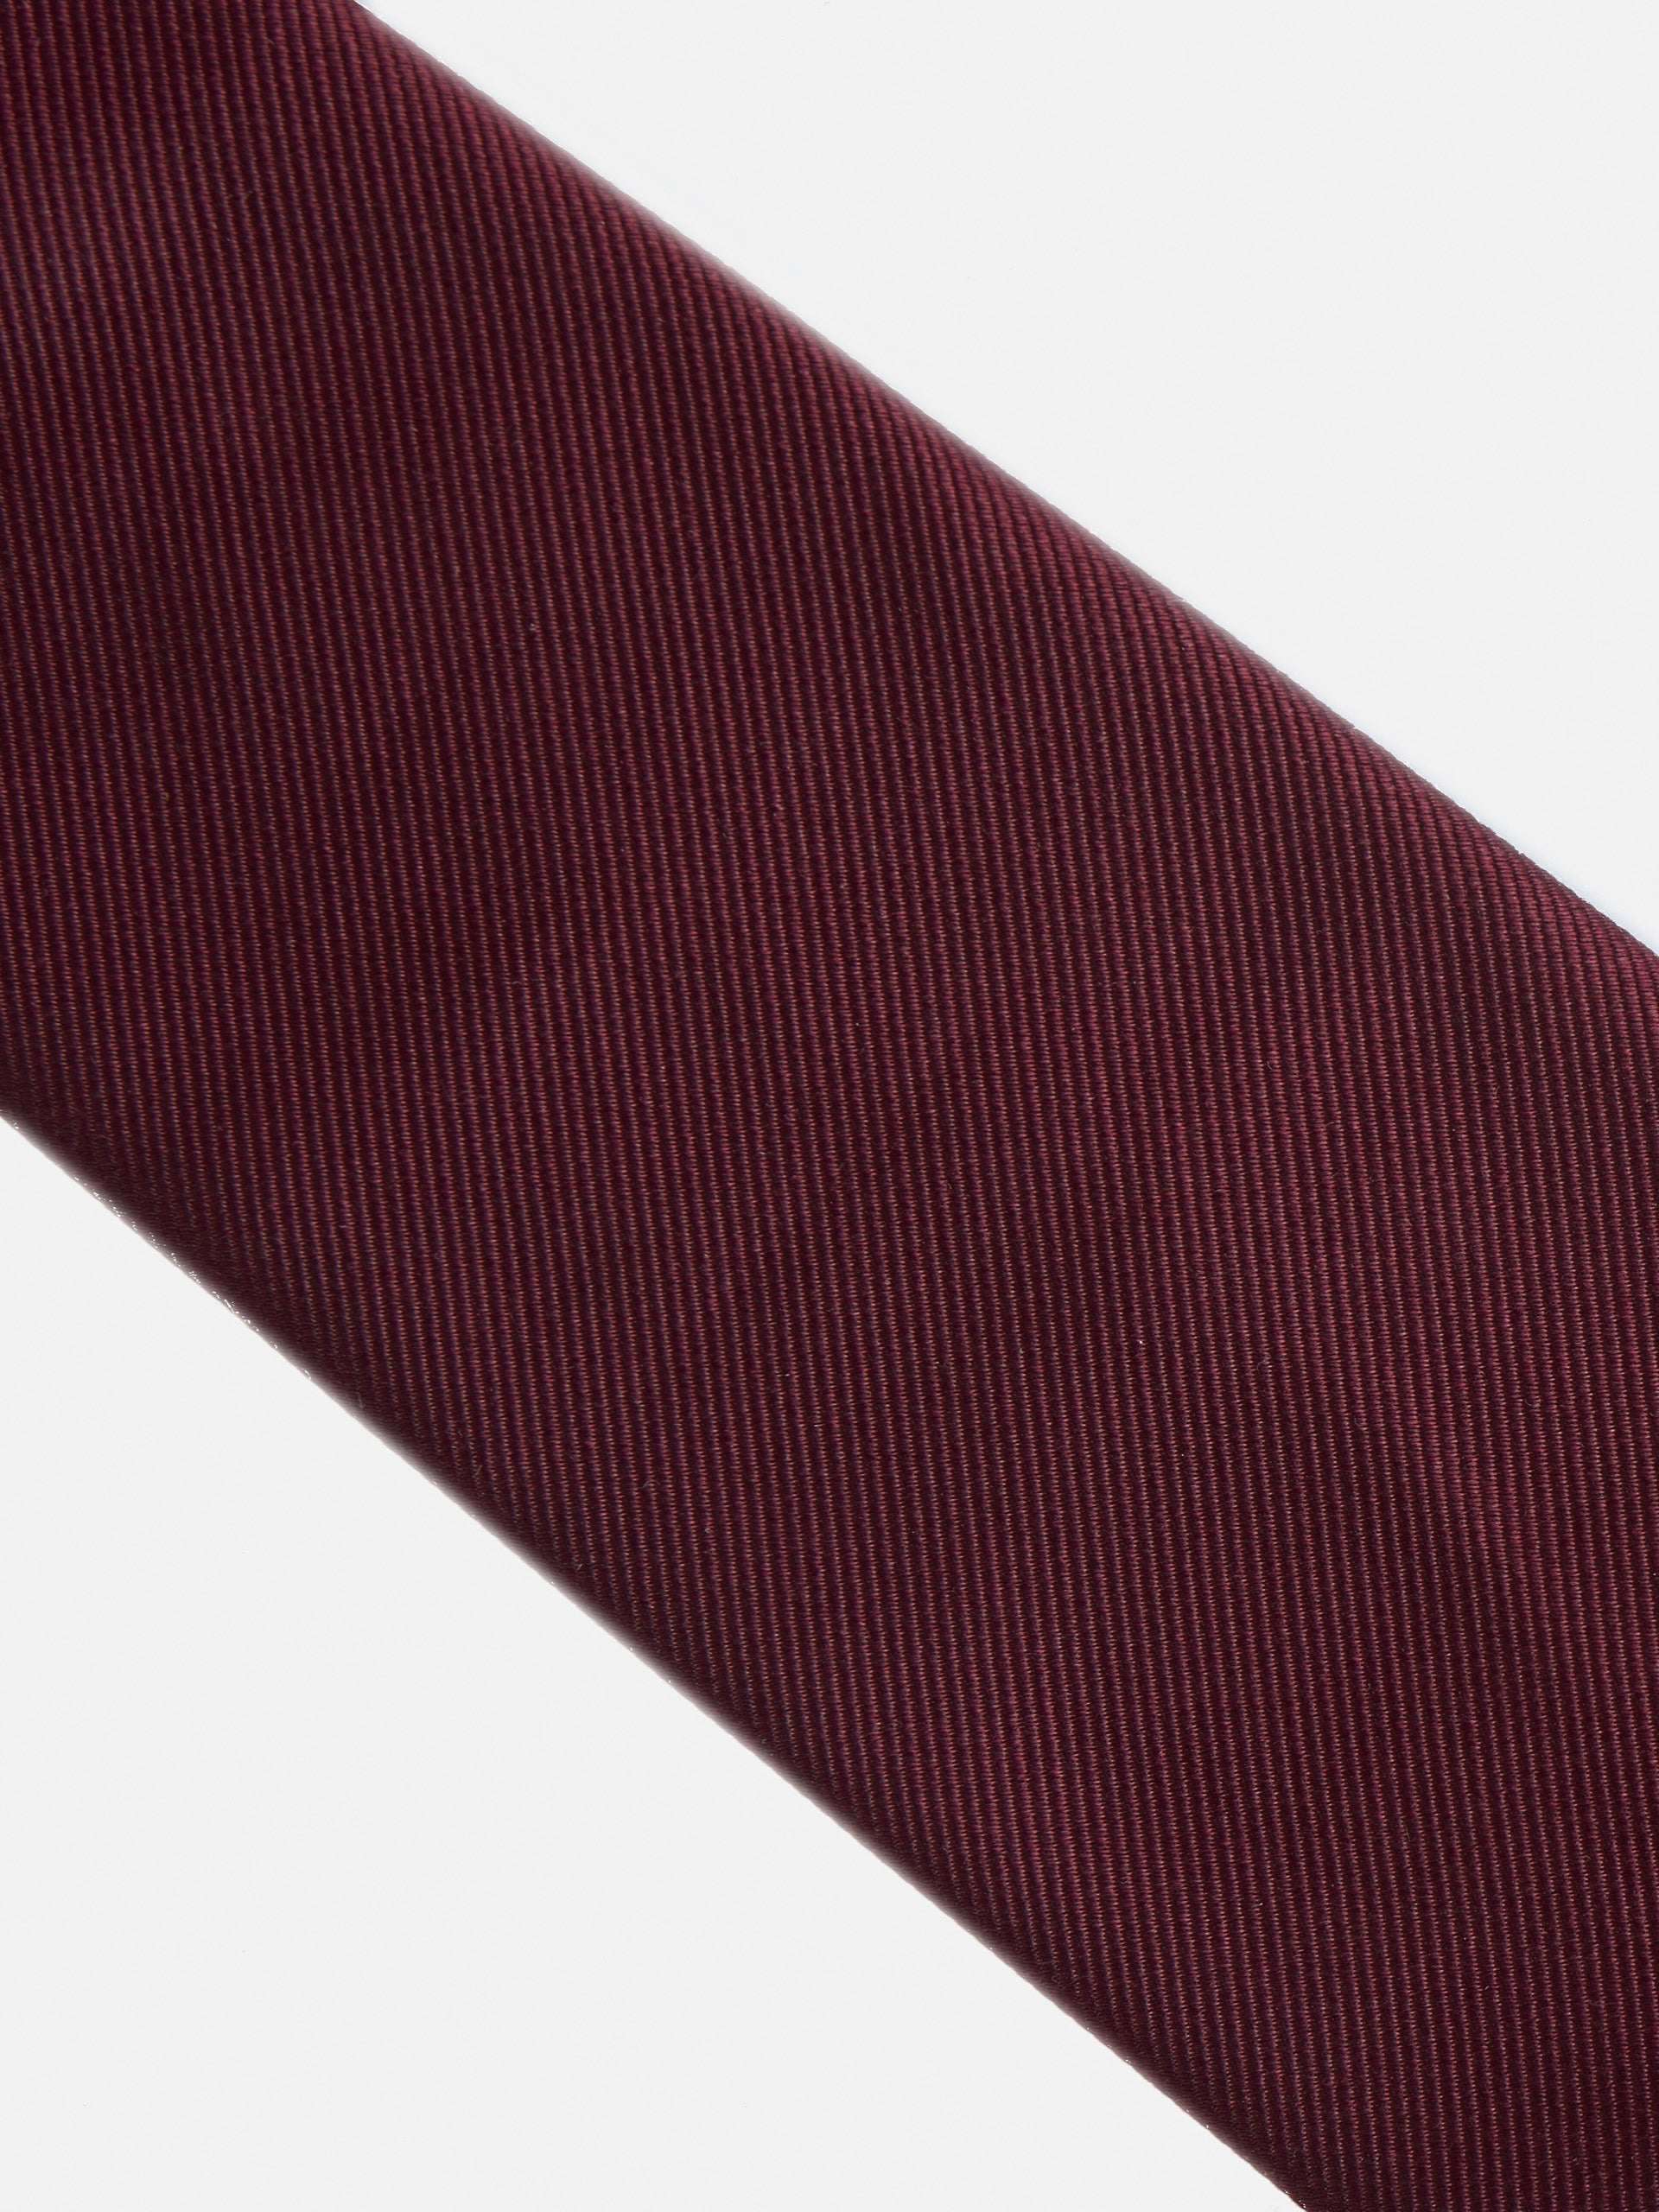 Smooth burgundy silbon tie